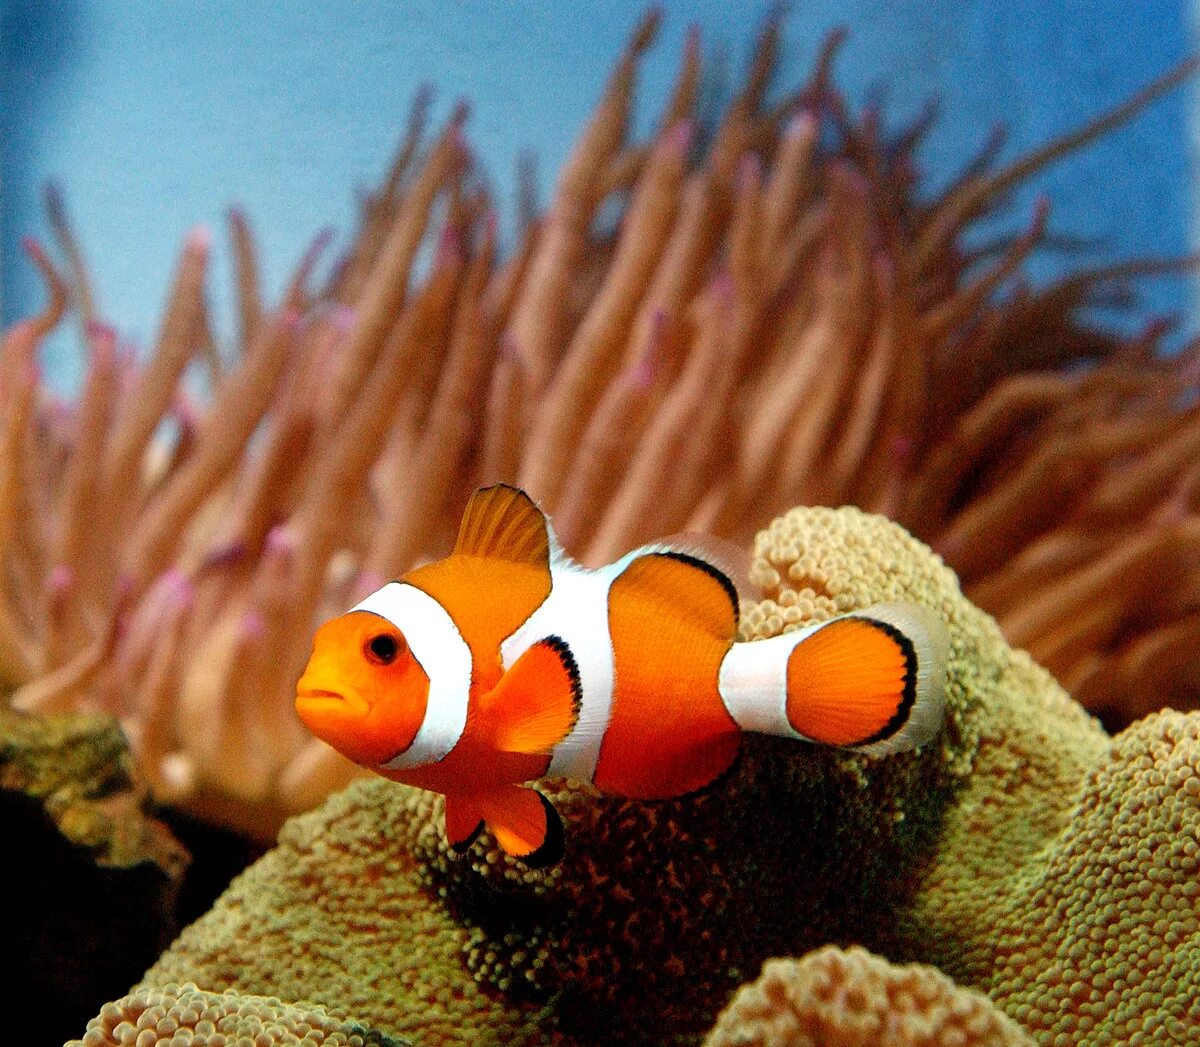 Друг рыбы клоуна. Рыба клоун оцеллярис. Пестроносый амфиприон. Рыба клоун Немо. Оранжевый амфиприон Немо.